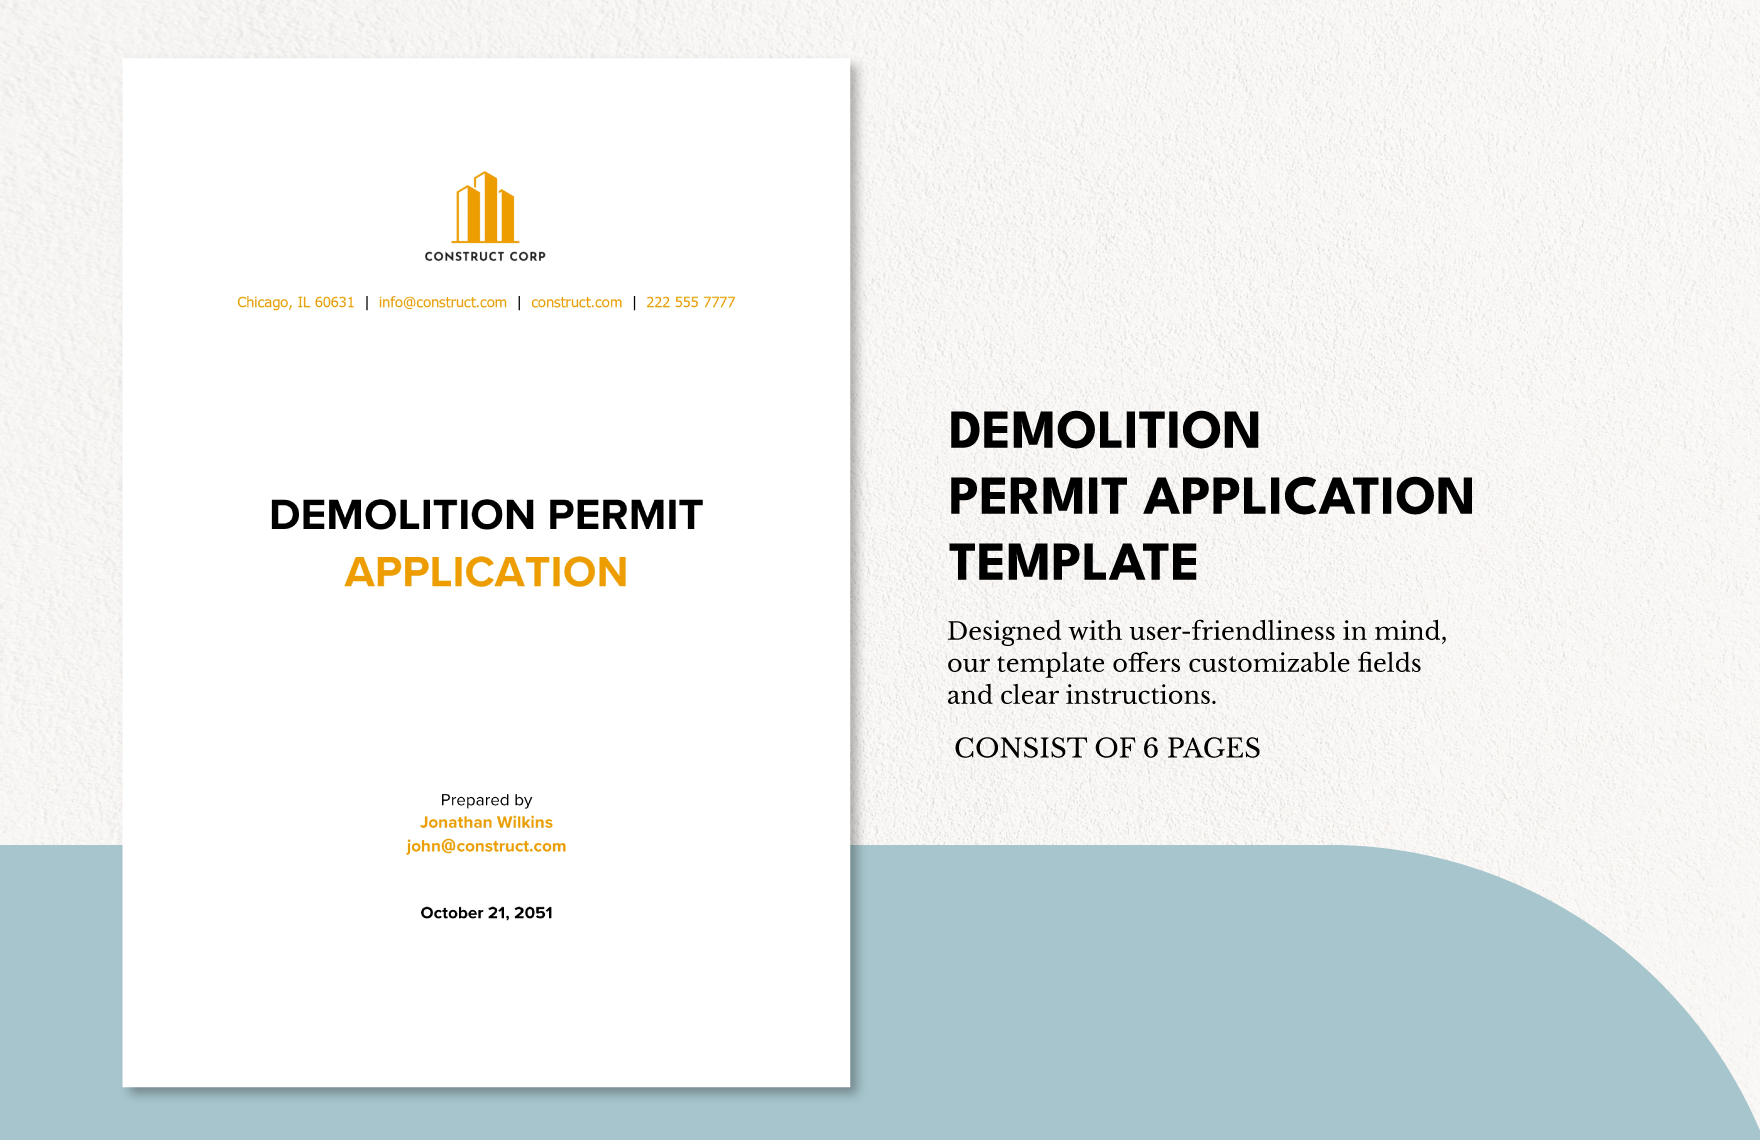 Demolition Permit Application Template in Word, Google Docs